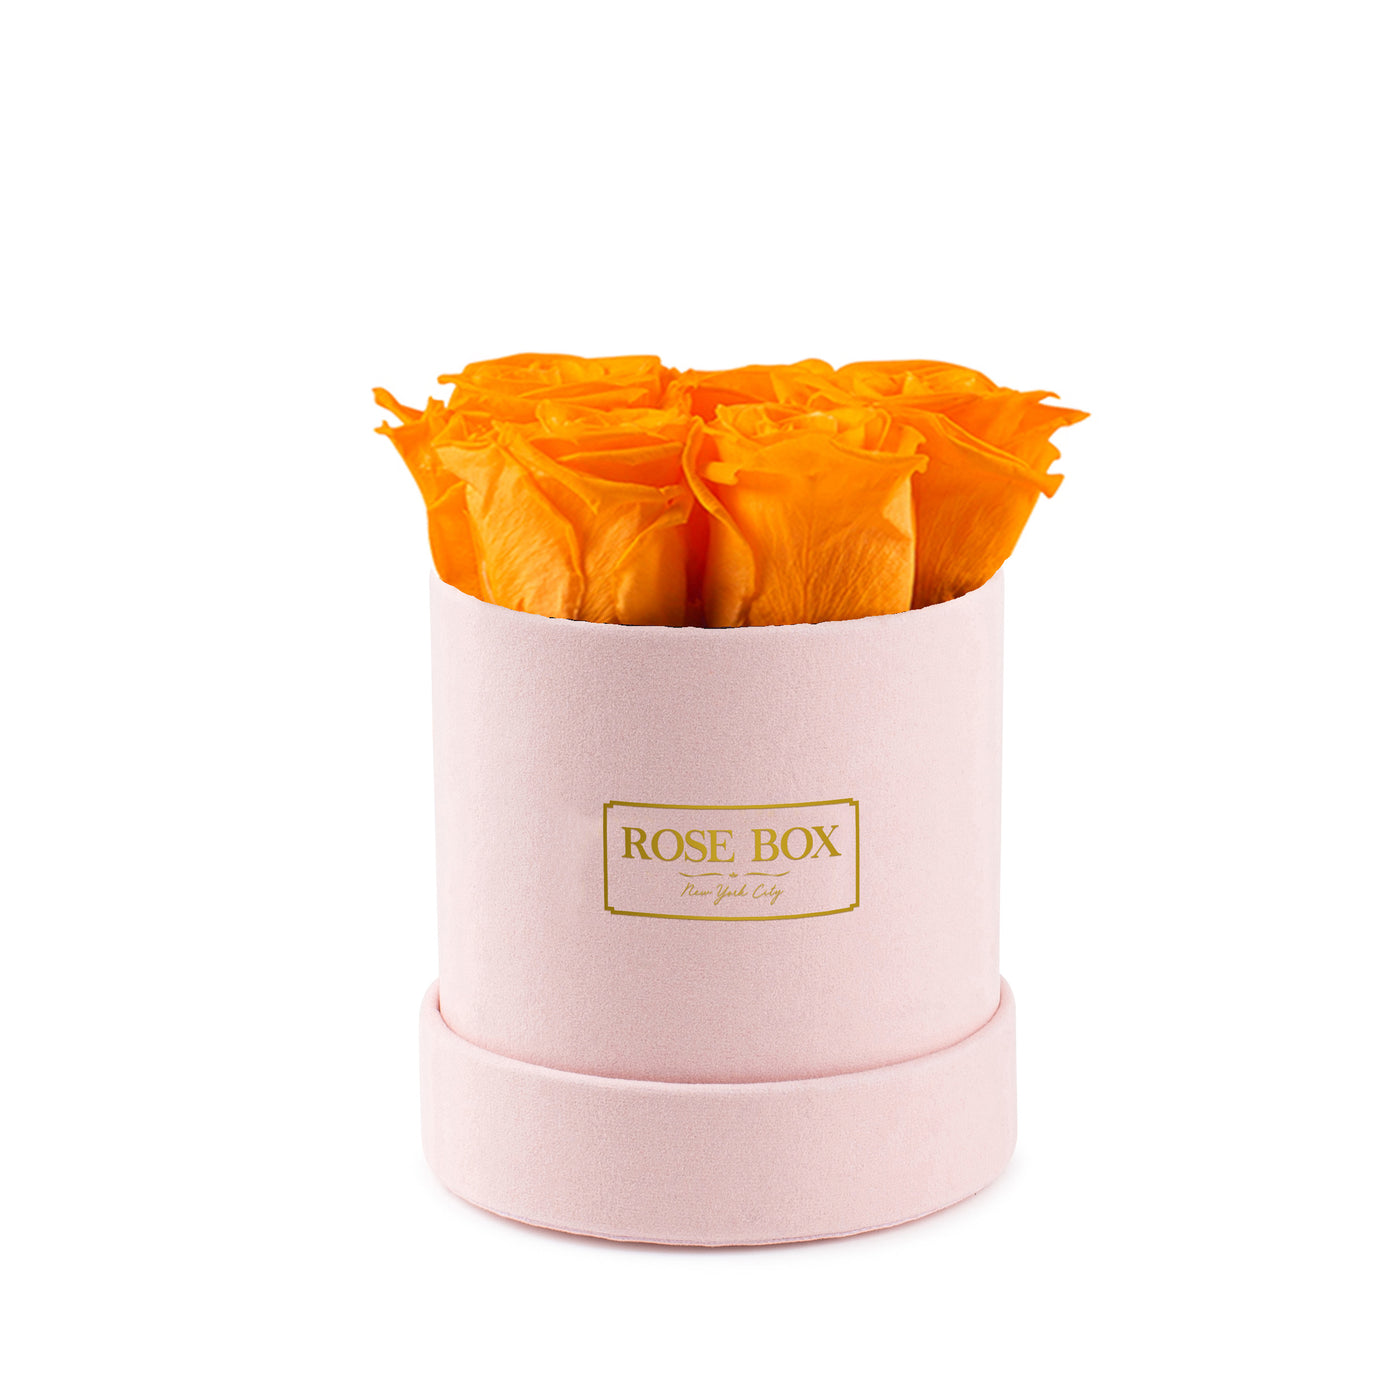 Mini Pink Box with Autumnal Orange Roses